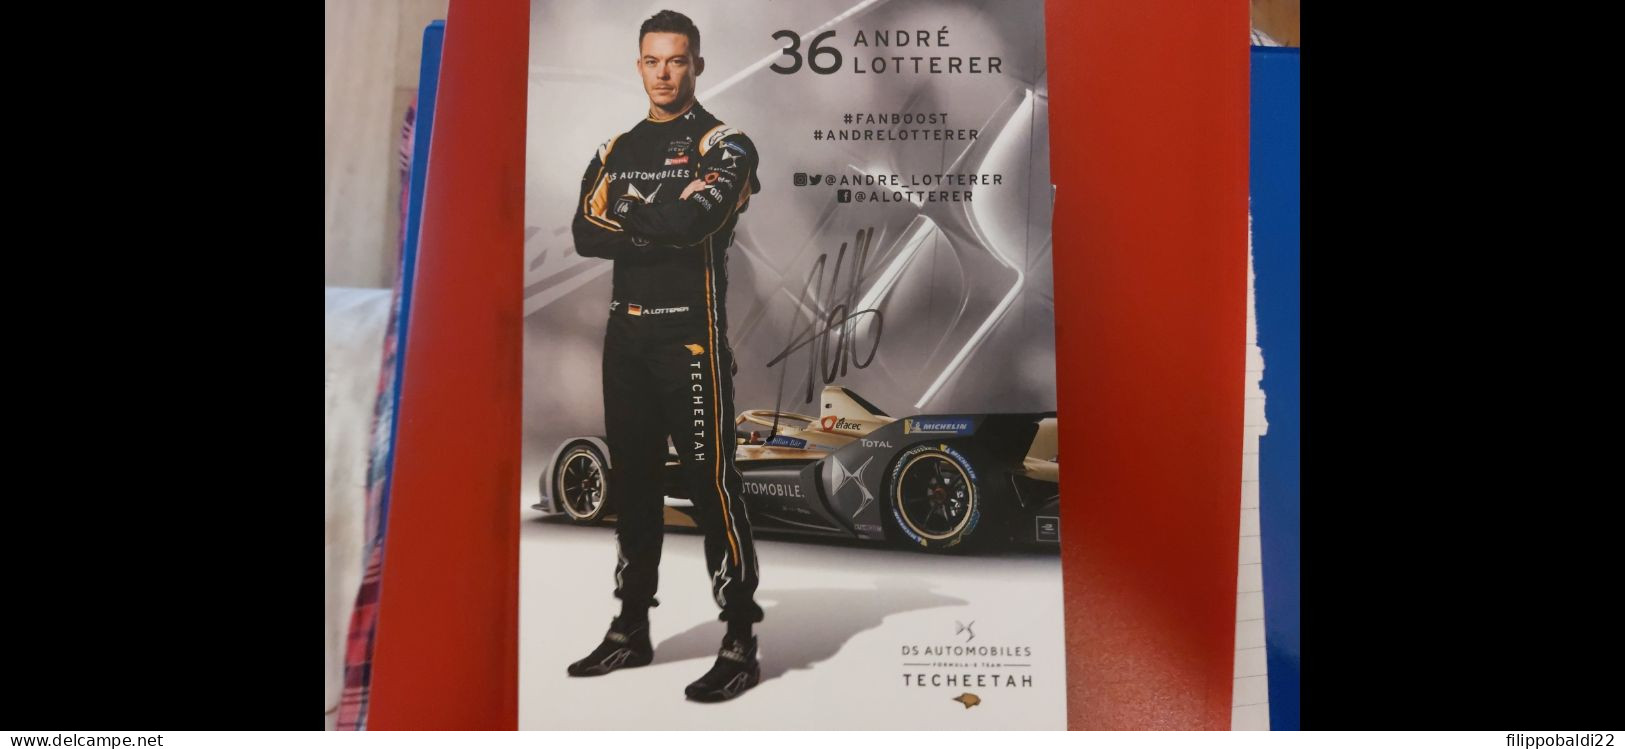 Andre Lotterer Autografo Autograph Signed - Automovilismo - F1